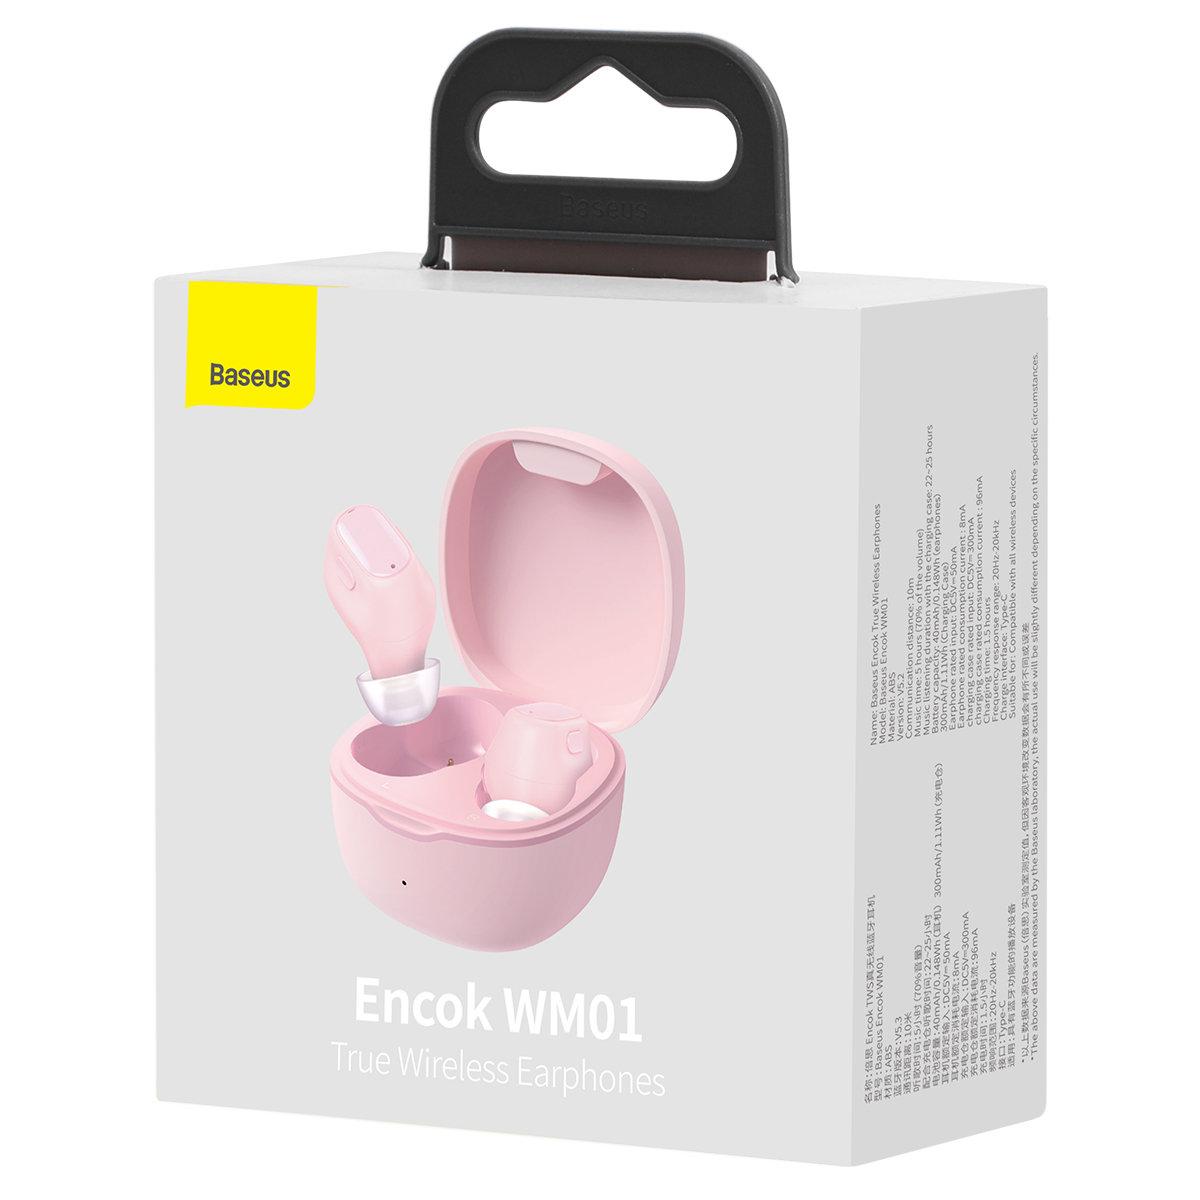 Baseus Encok WM01 TWS bezdrátová sluchátka do uší Bluetooth 5.0 růžová NGTW240004